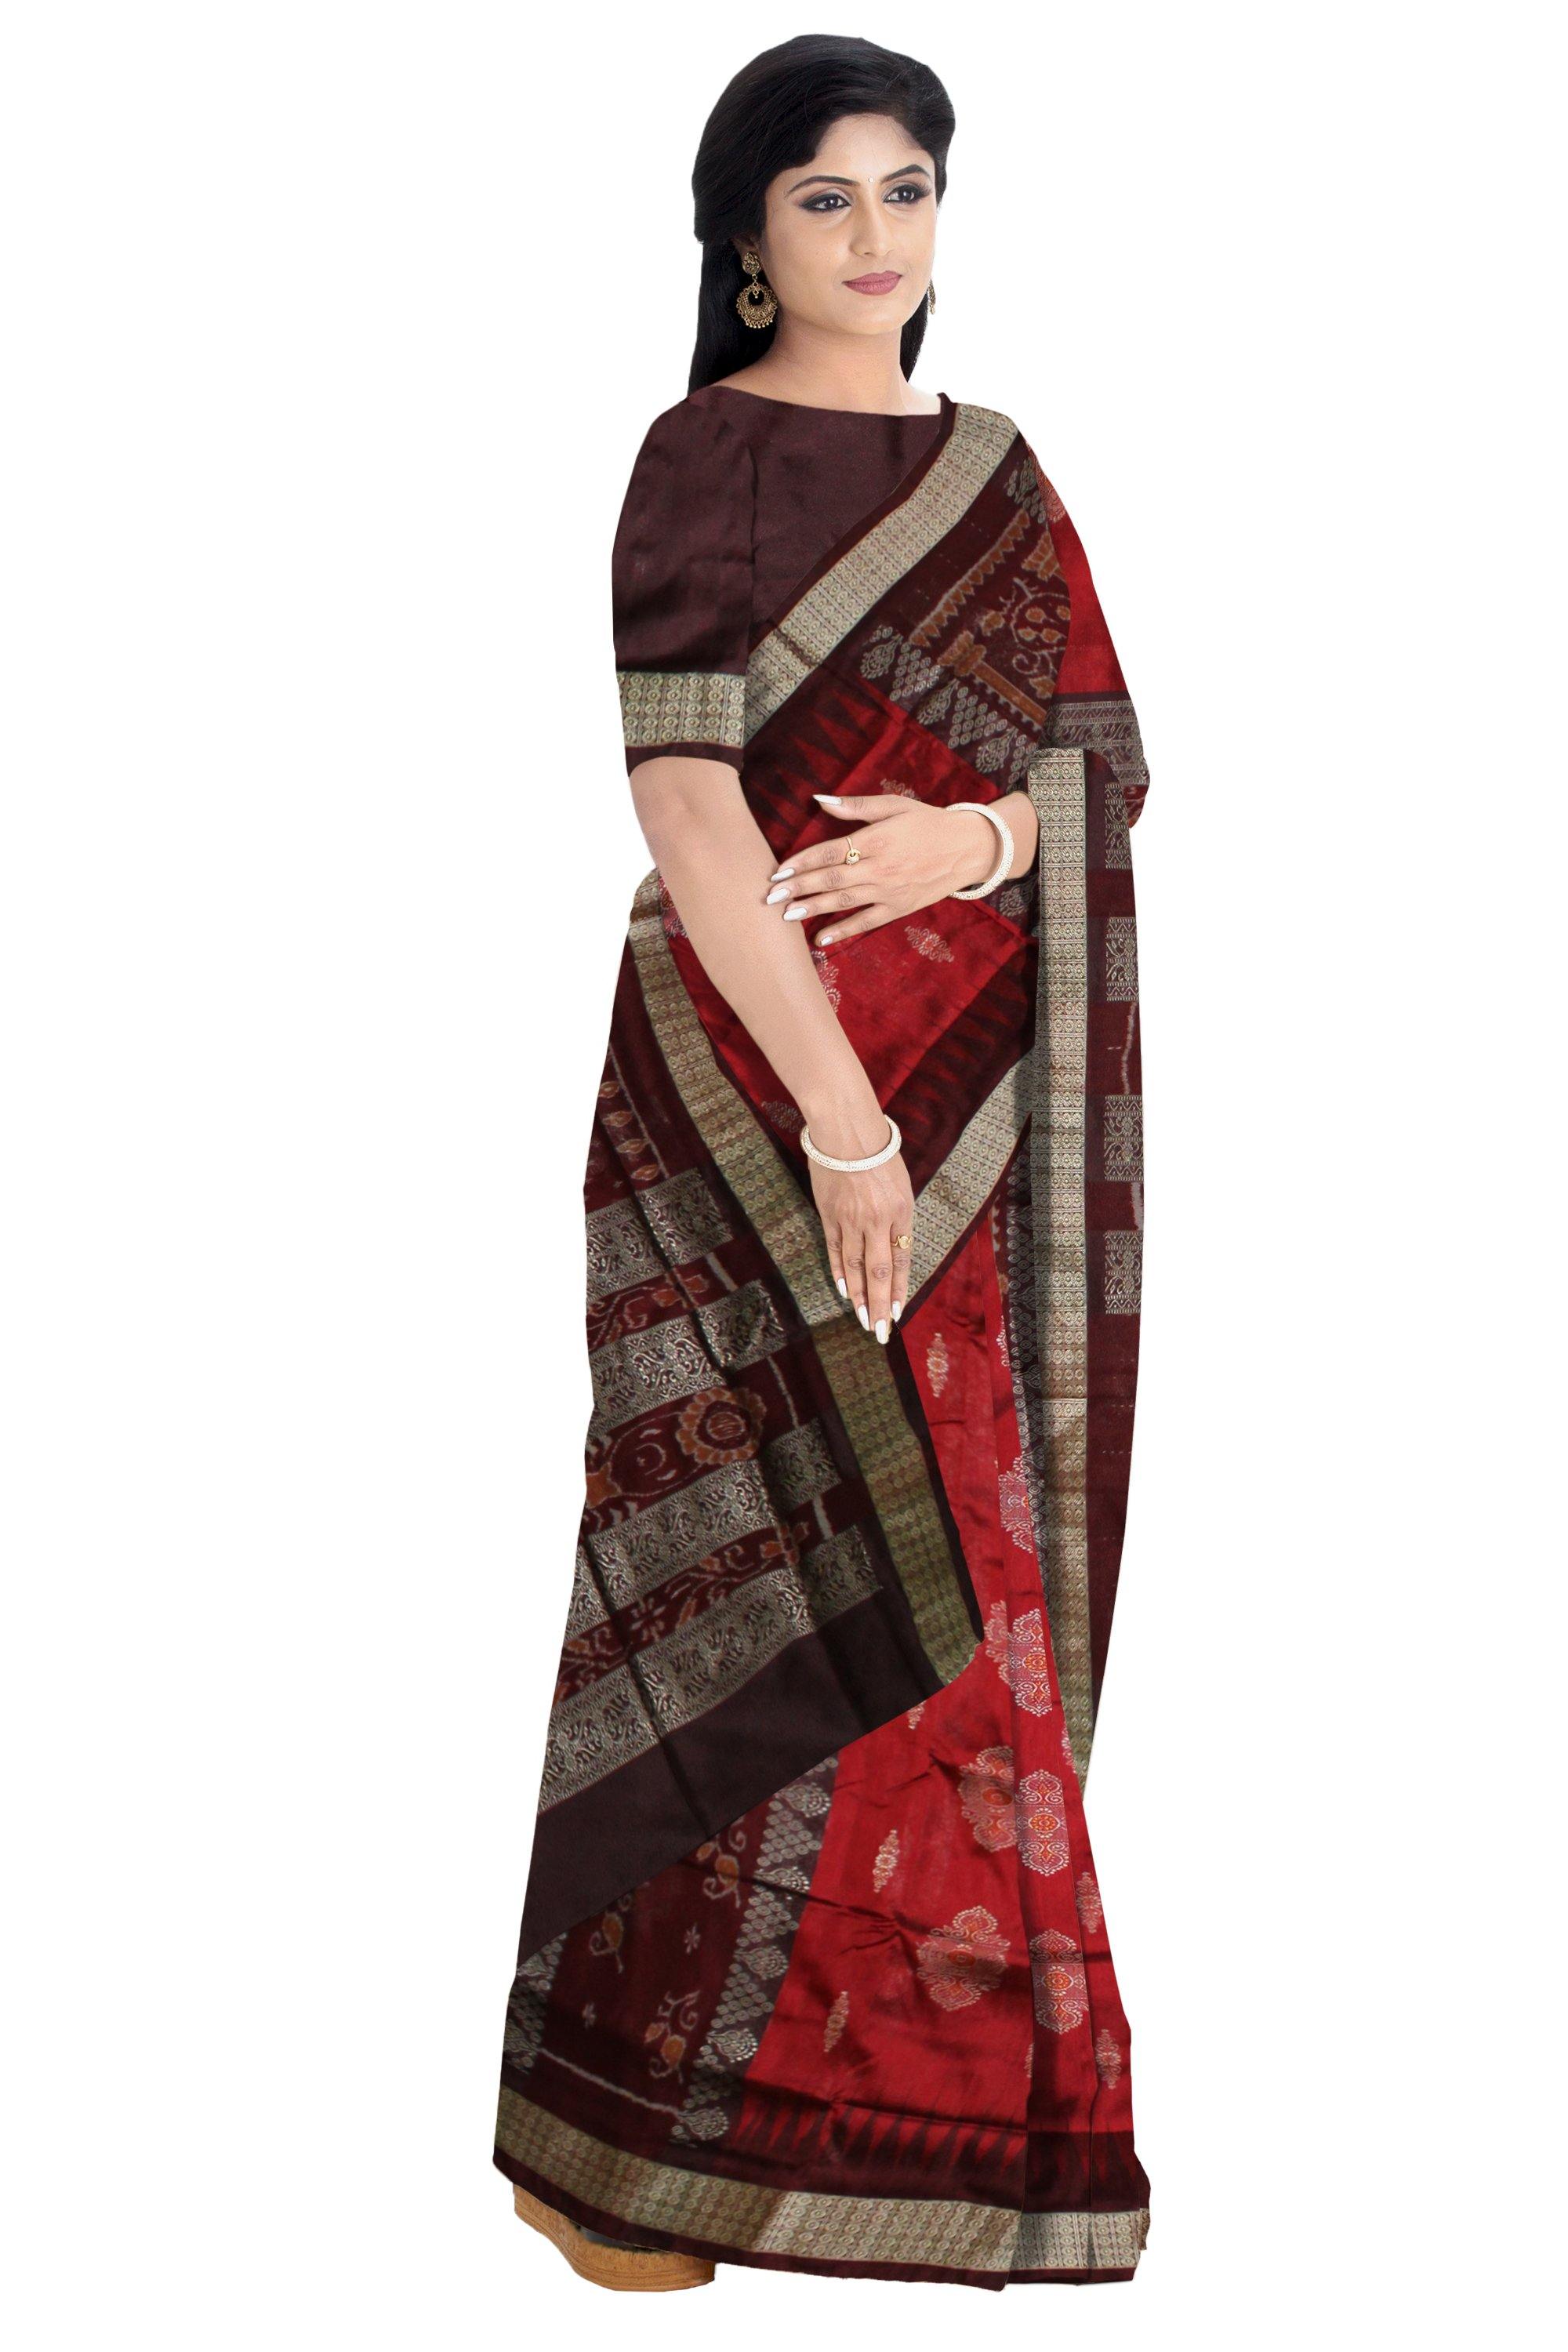 Sambalpuri Pata Saree in Red Color & Flower Bomkei with blouse Piece - Koshali Arts & Crafts Enterprise